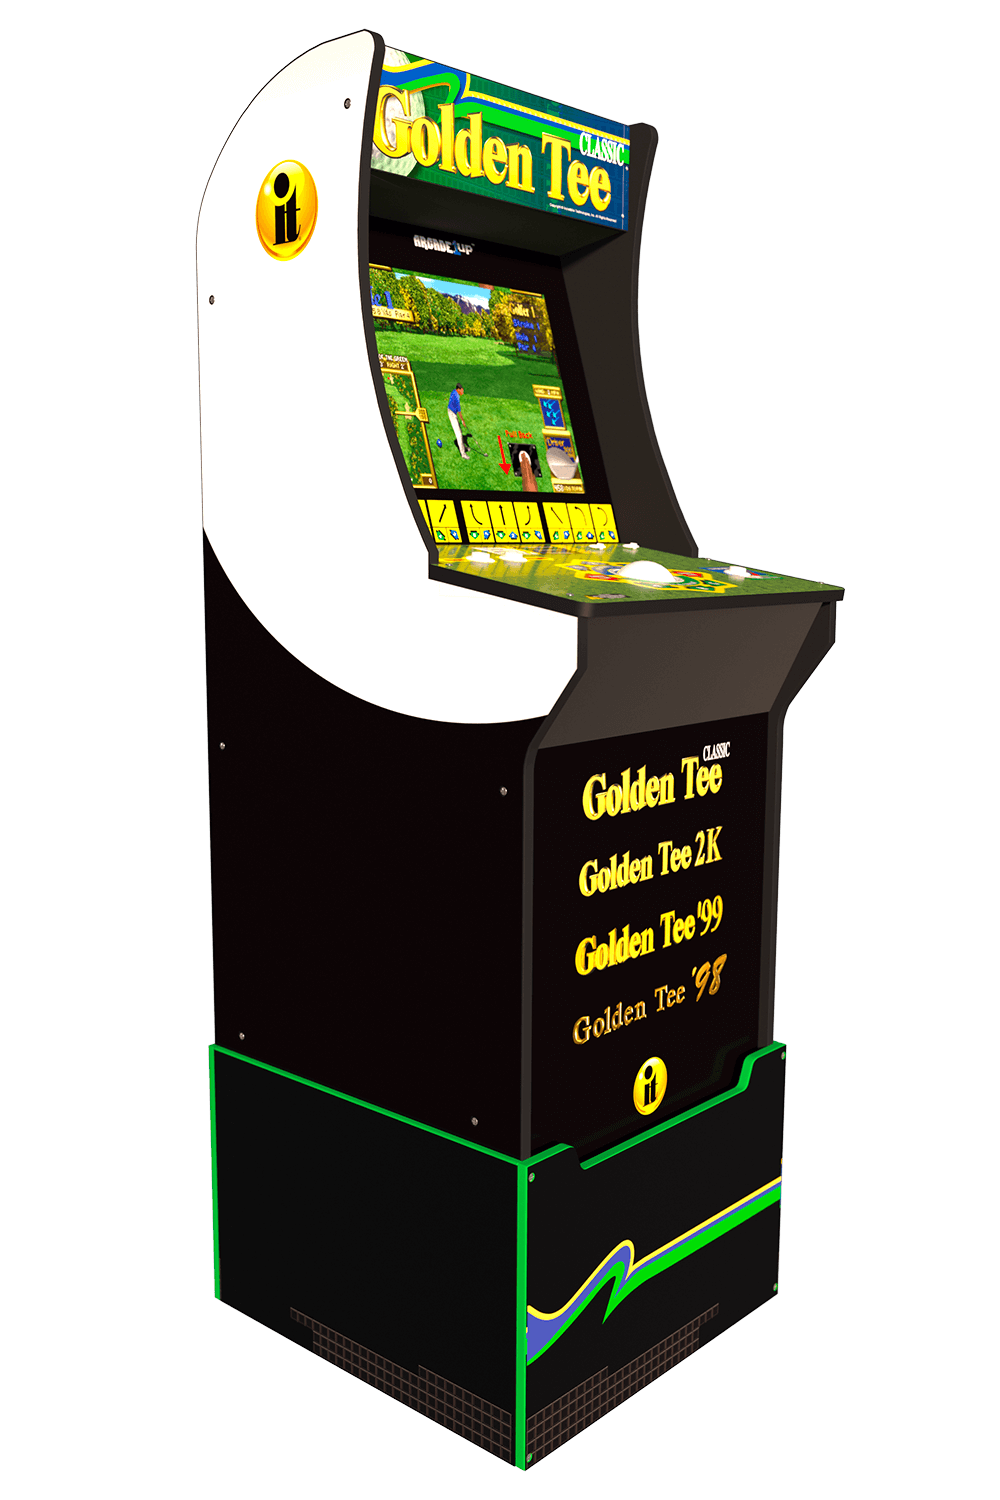 Golden Tee Arcade Arcade1Up